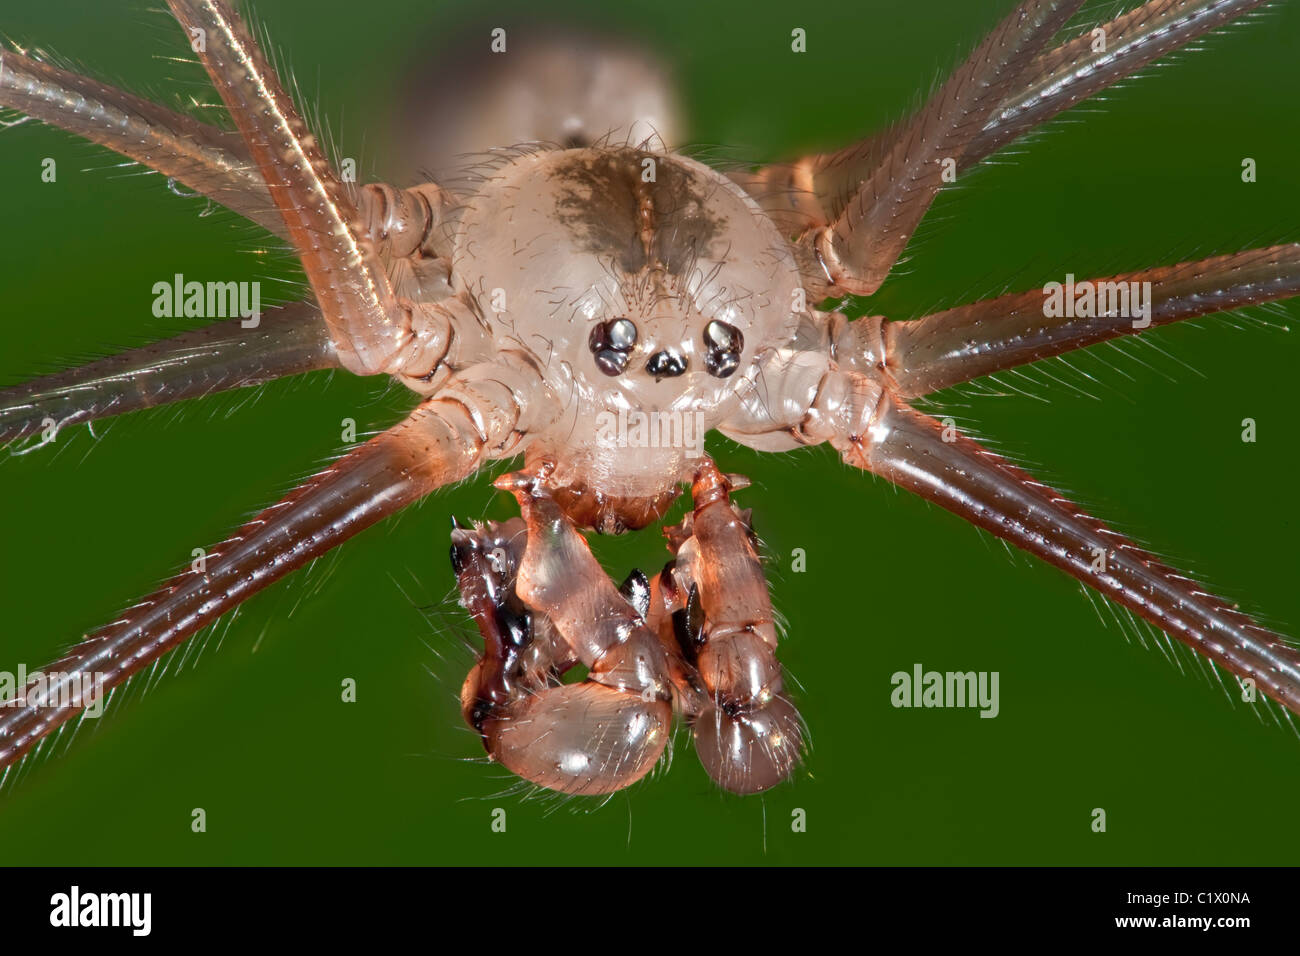 granddaddy long-legs spider, daddy long-legs spider, daddy long-legger,  cellar spider, vibrating spider, macro view of head Stock Photo - Alamy